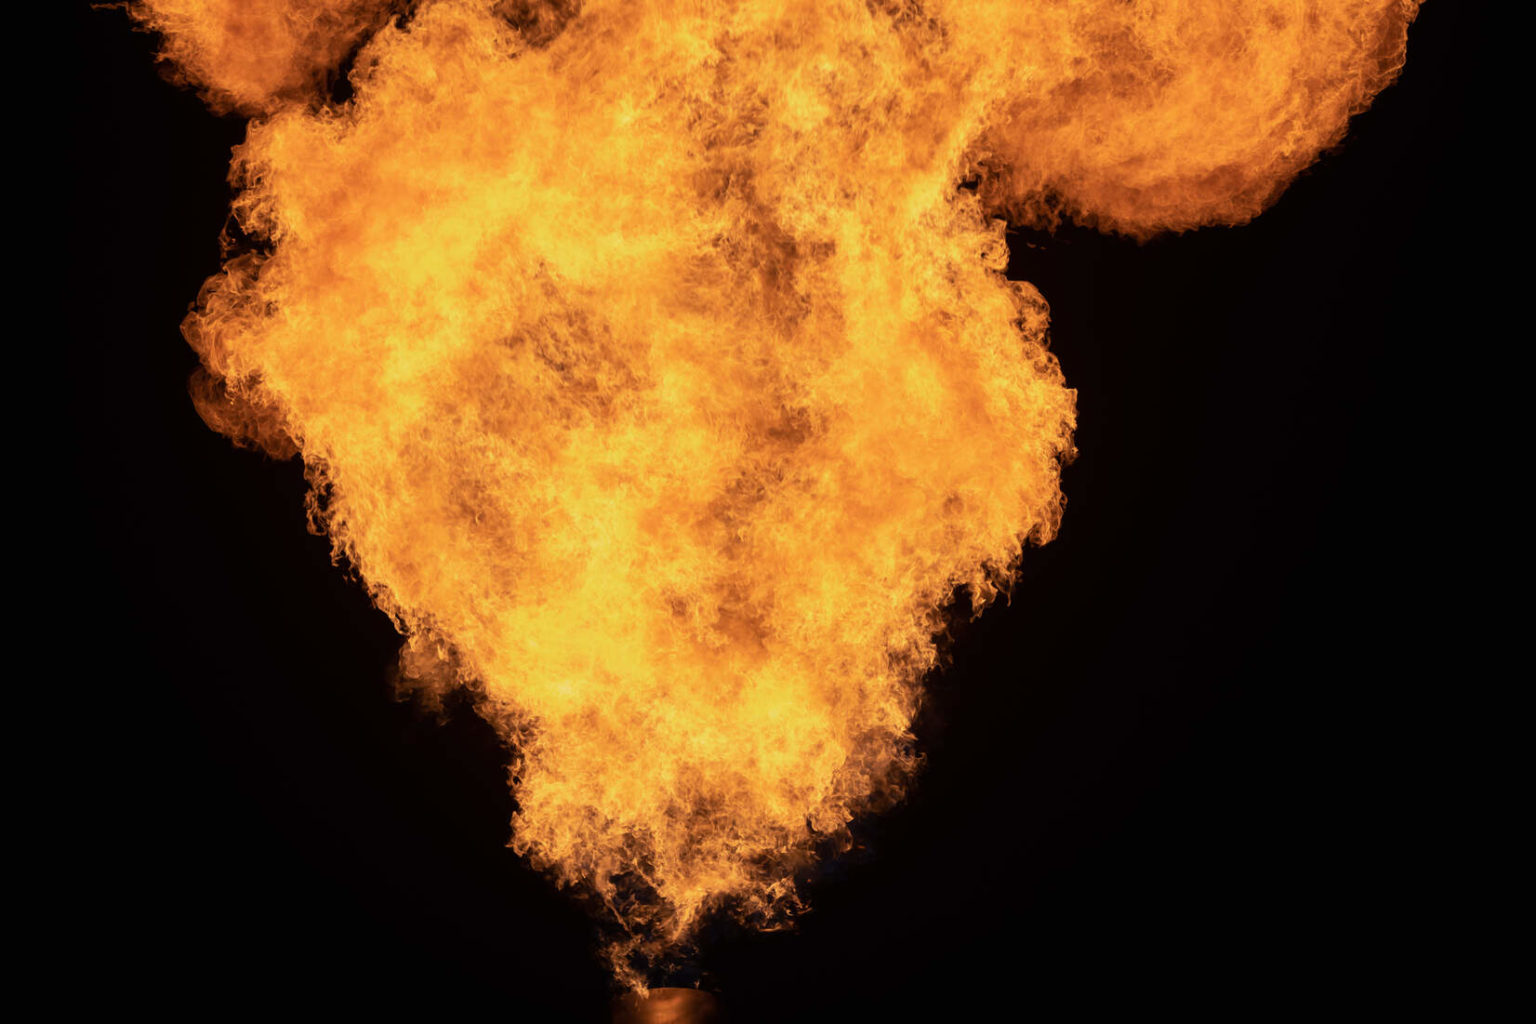 A large orange fiery flare of methane gas.